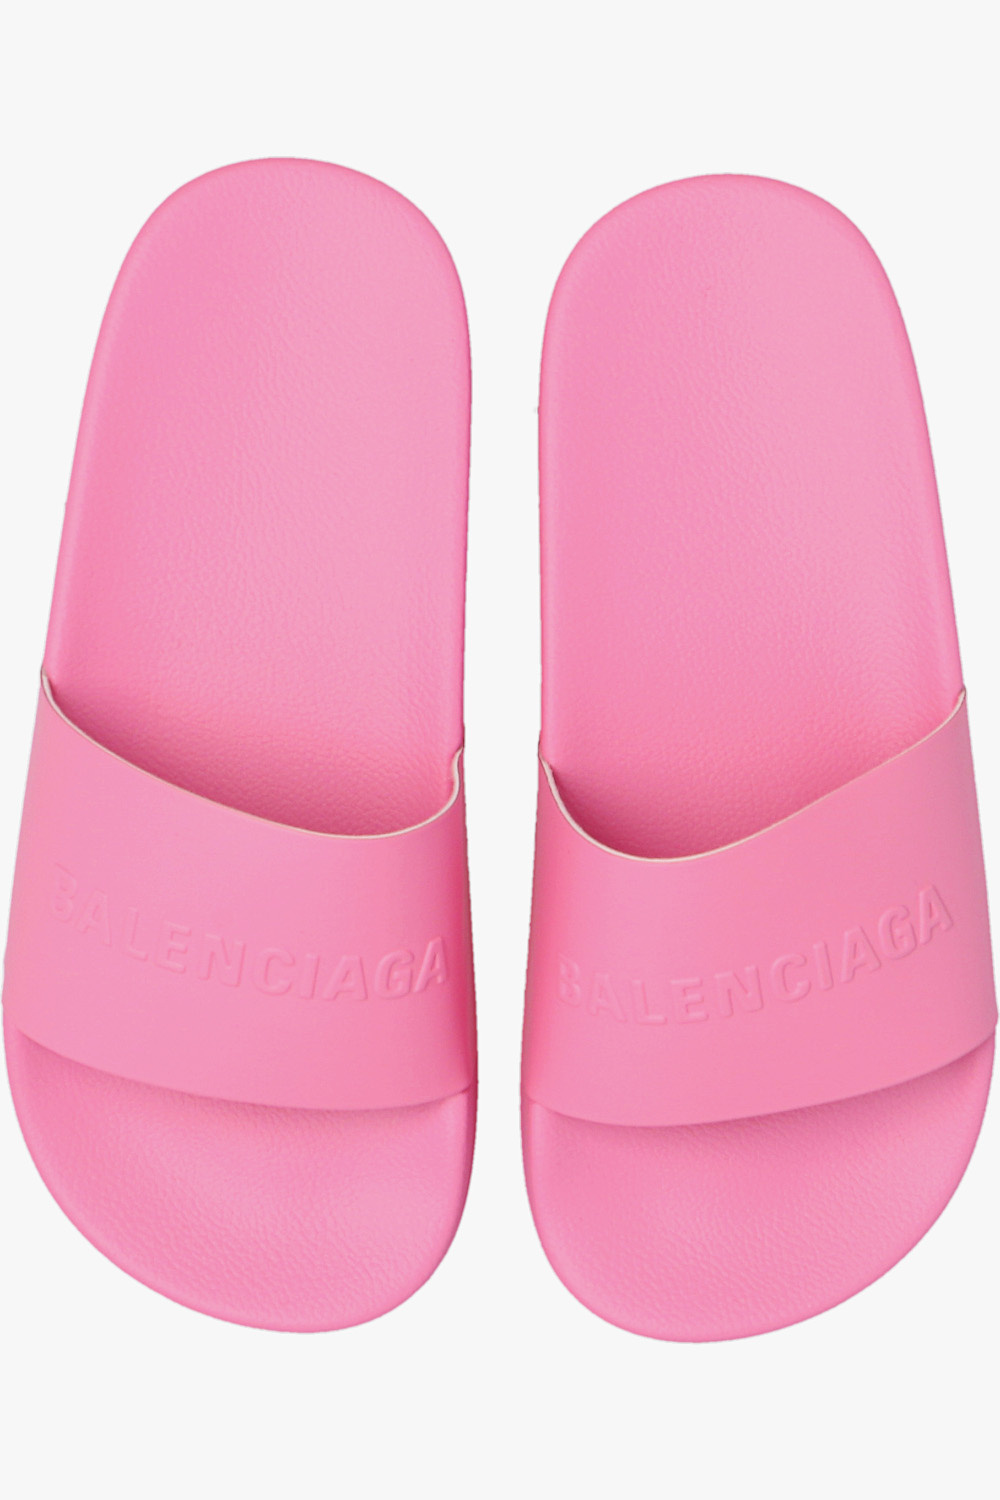 Balenciaga Kids wallets suitcases pens shoe-care cups belts caps Watches